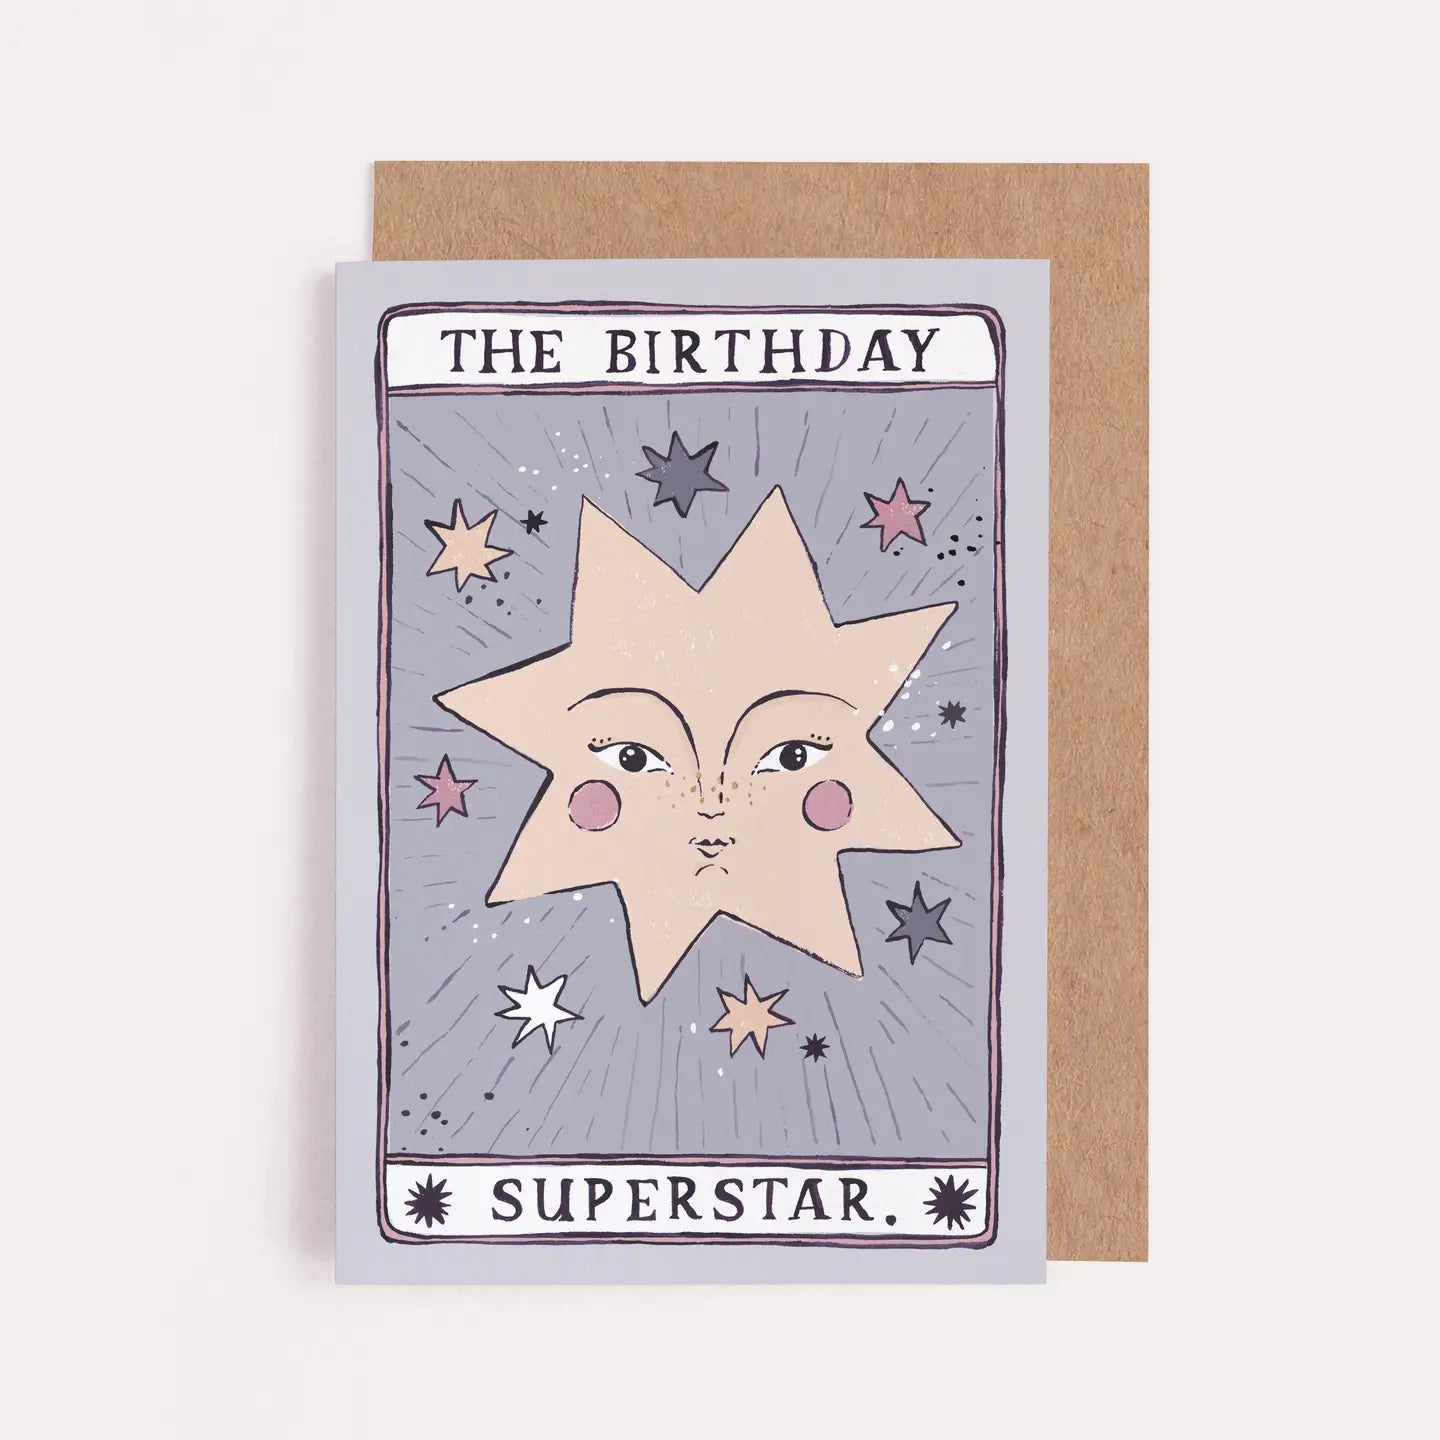 The Birthday Superstar Greeting Card